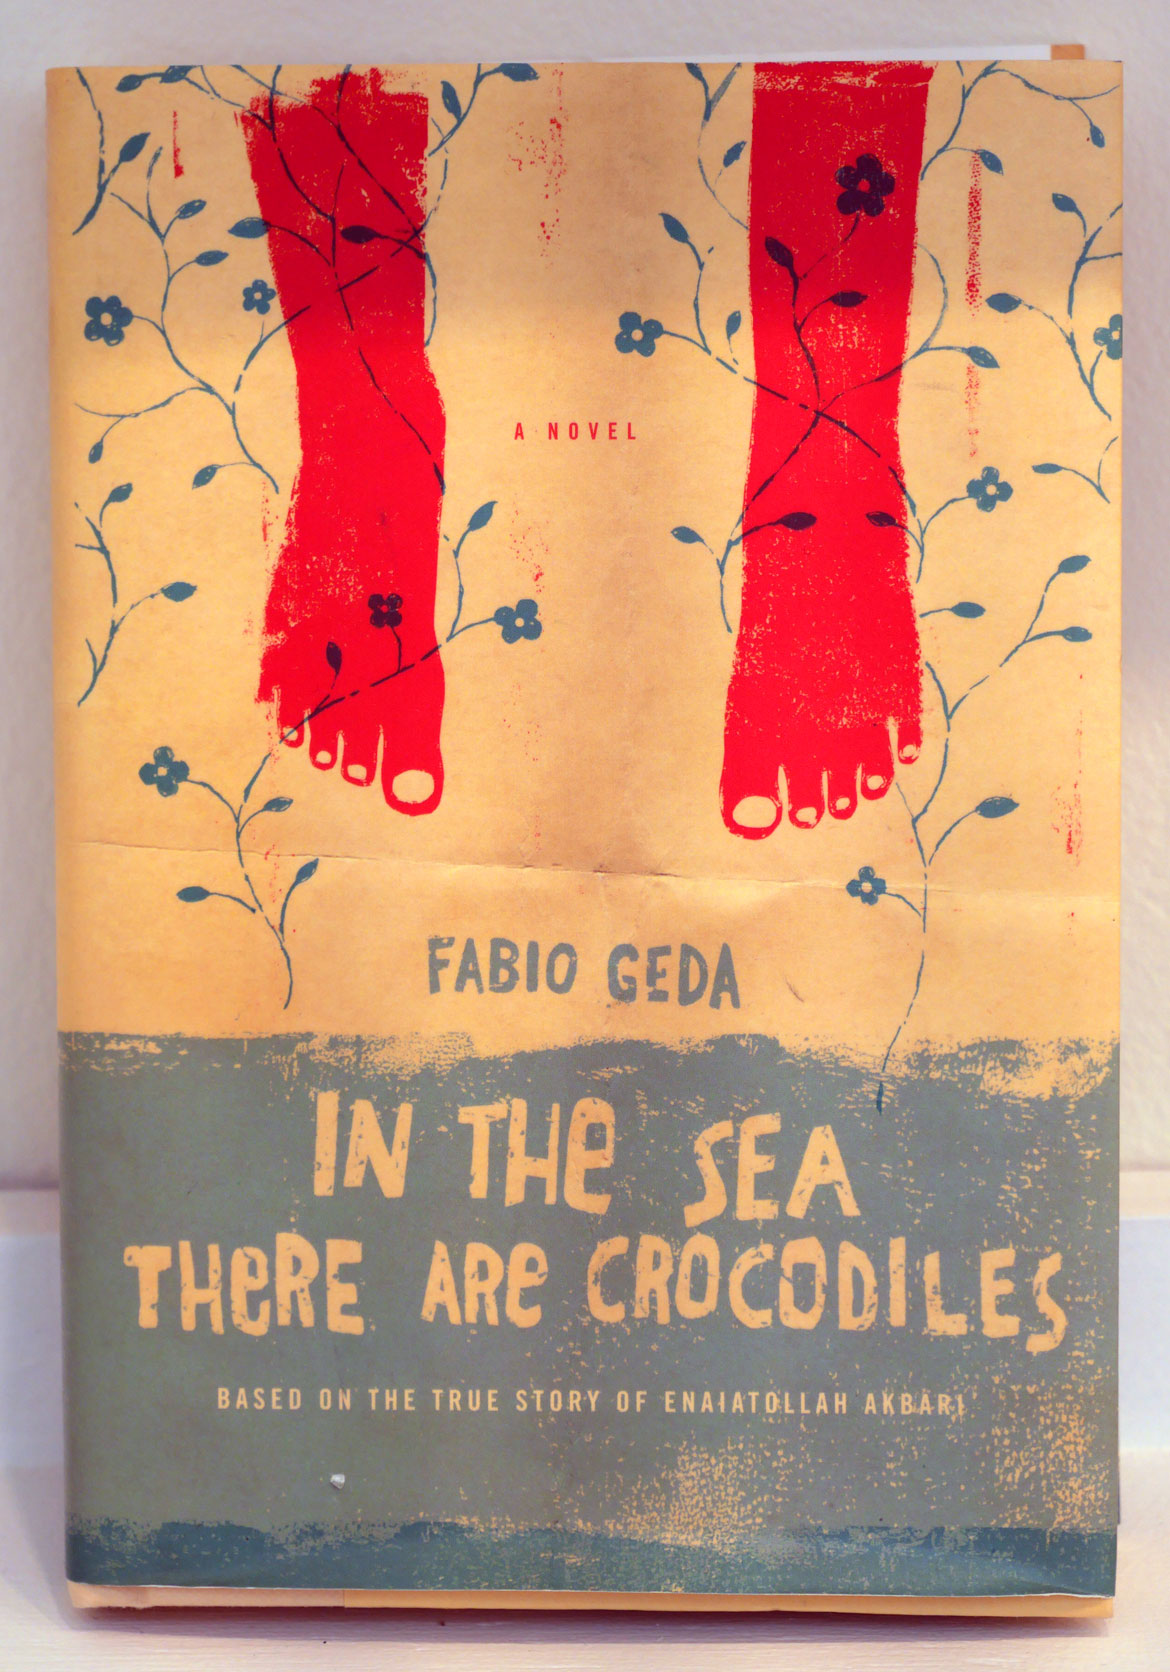 Edel Rodriguez's cover illustration for Fabio Geda's book "In the Sea There Are Crocodiles."